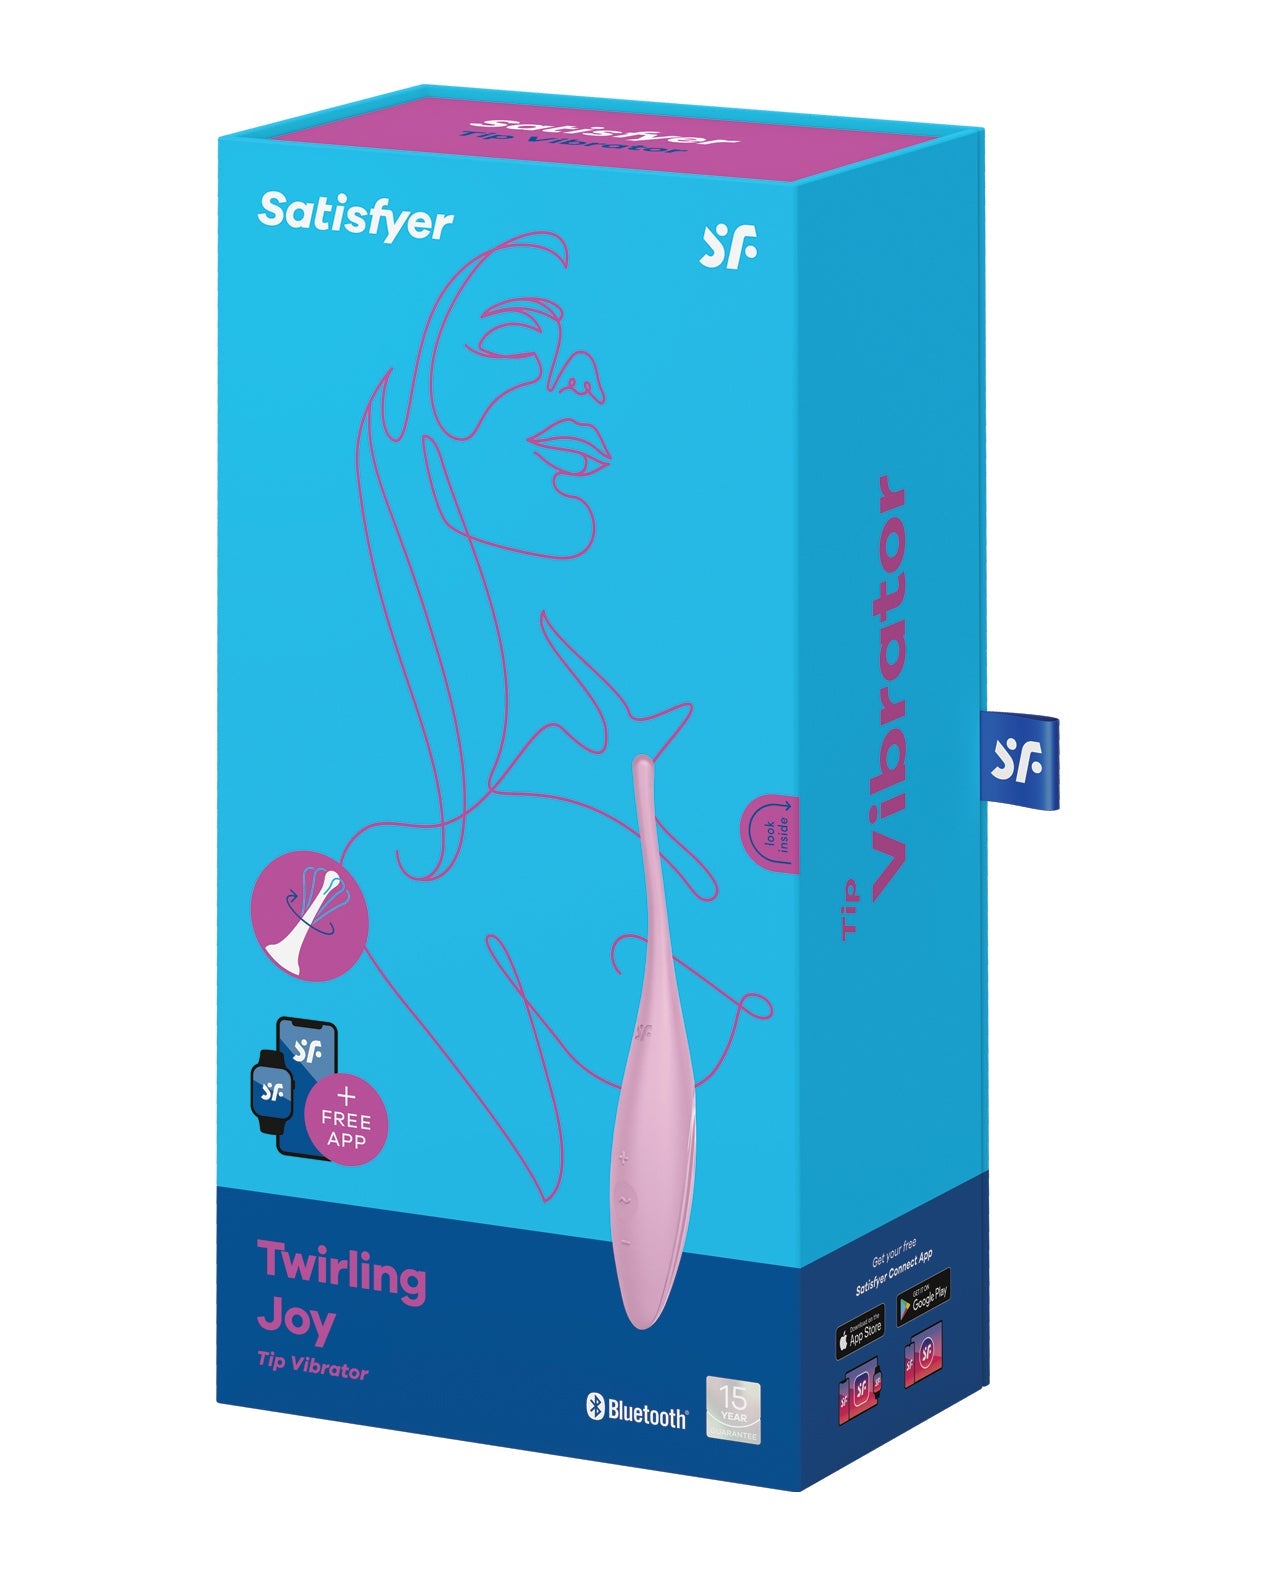 Get Satisfyer Twirling Joy - Pink